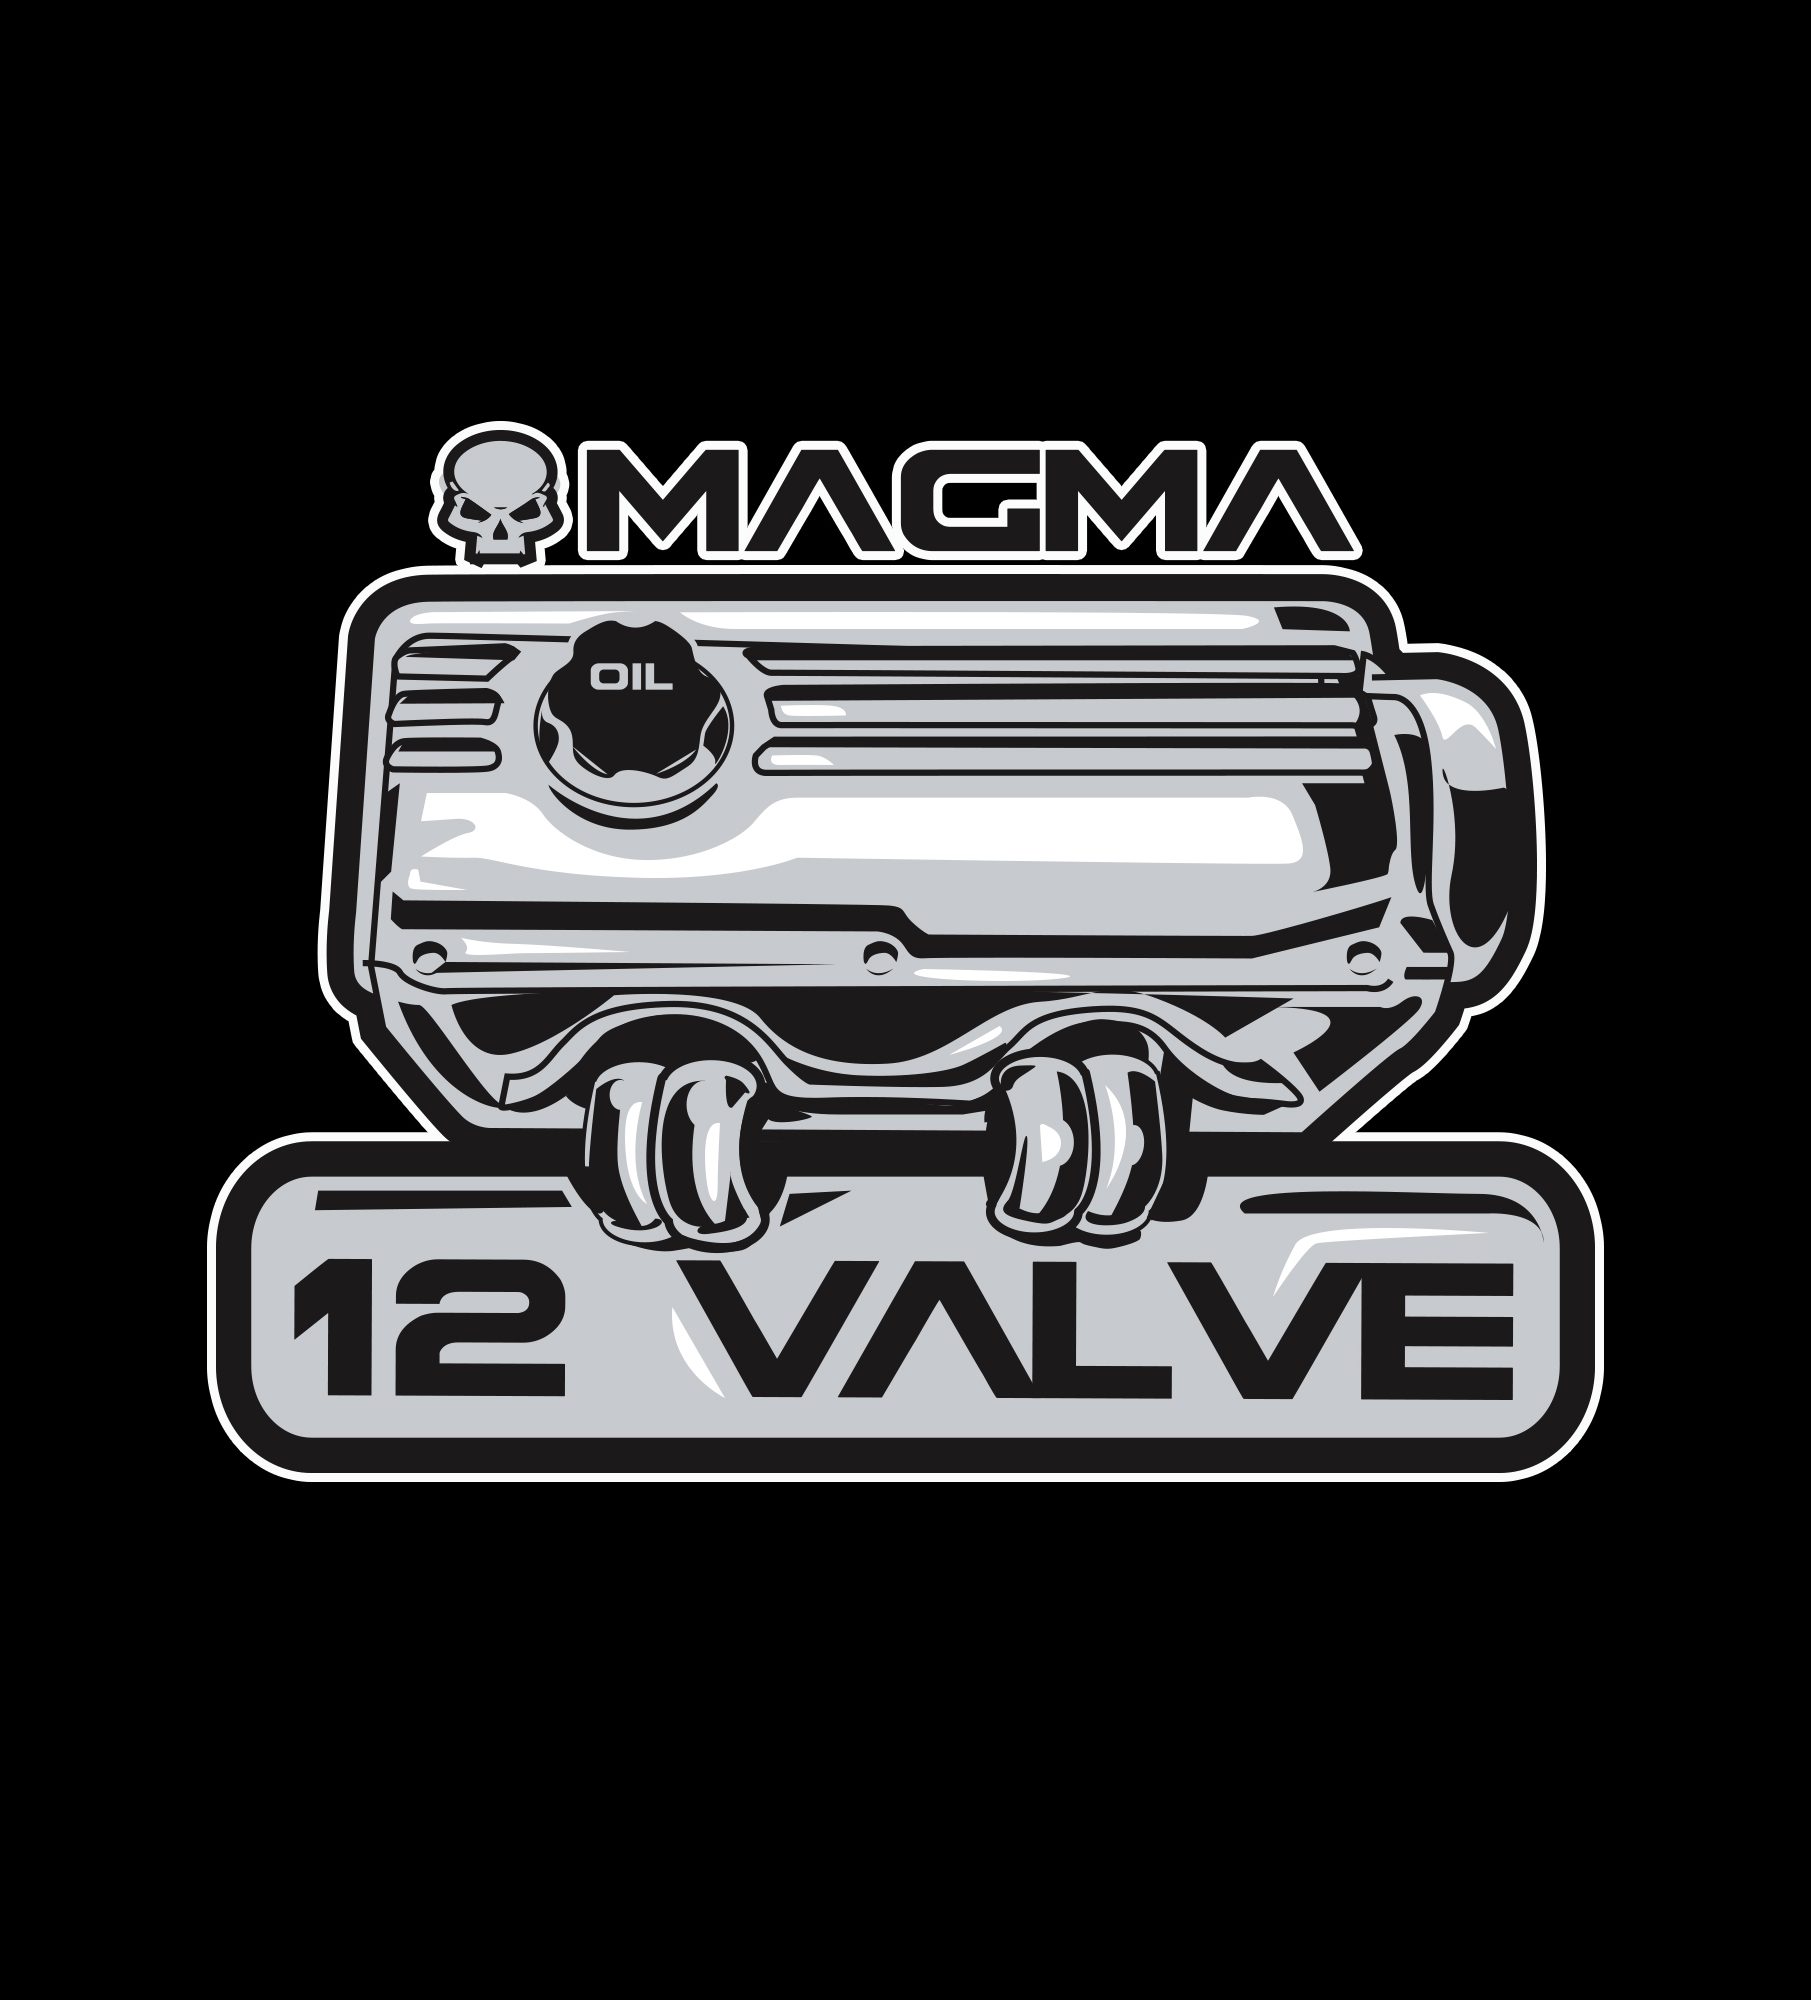 magma12valve-cover